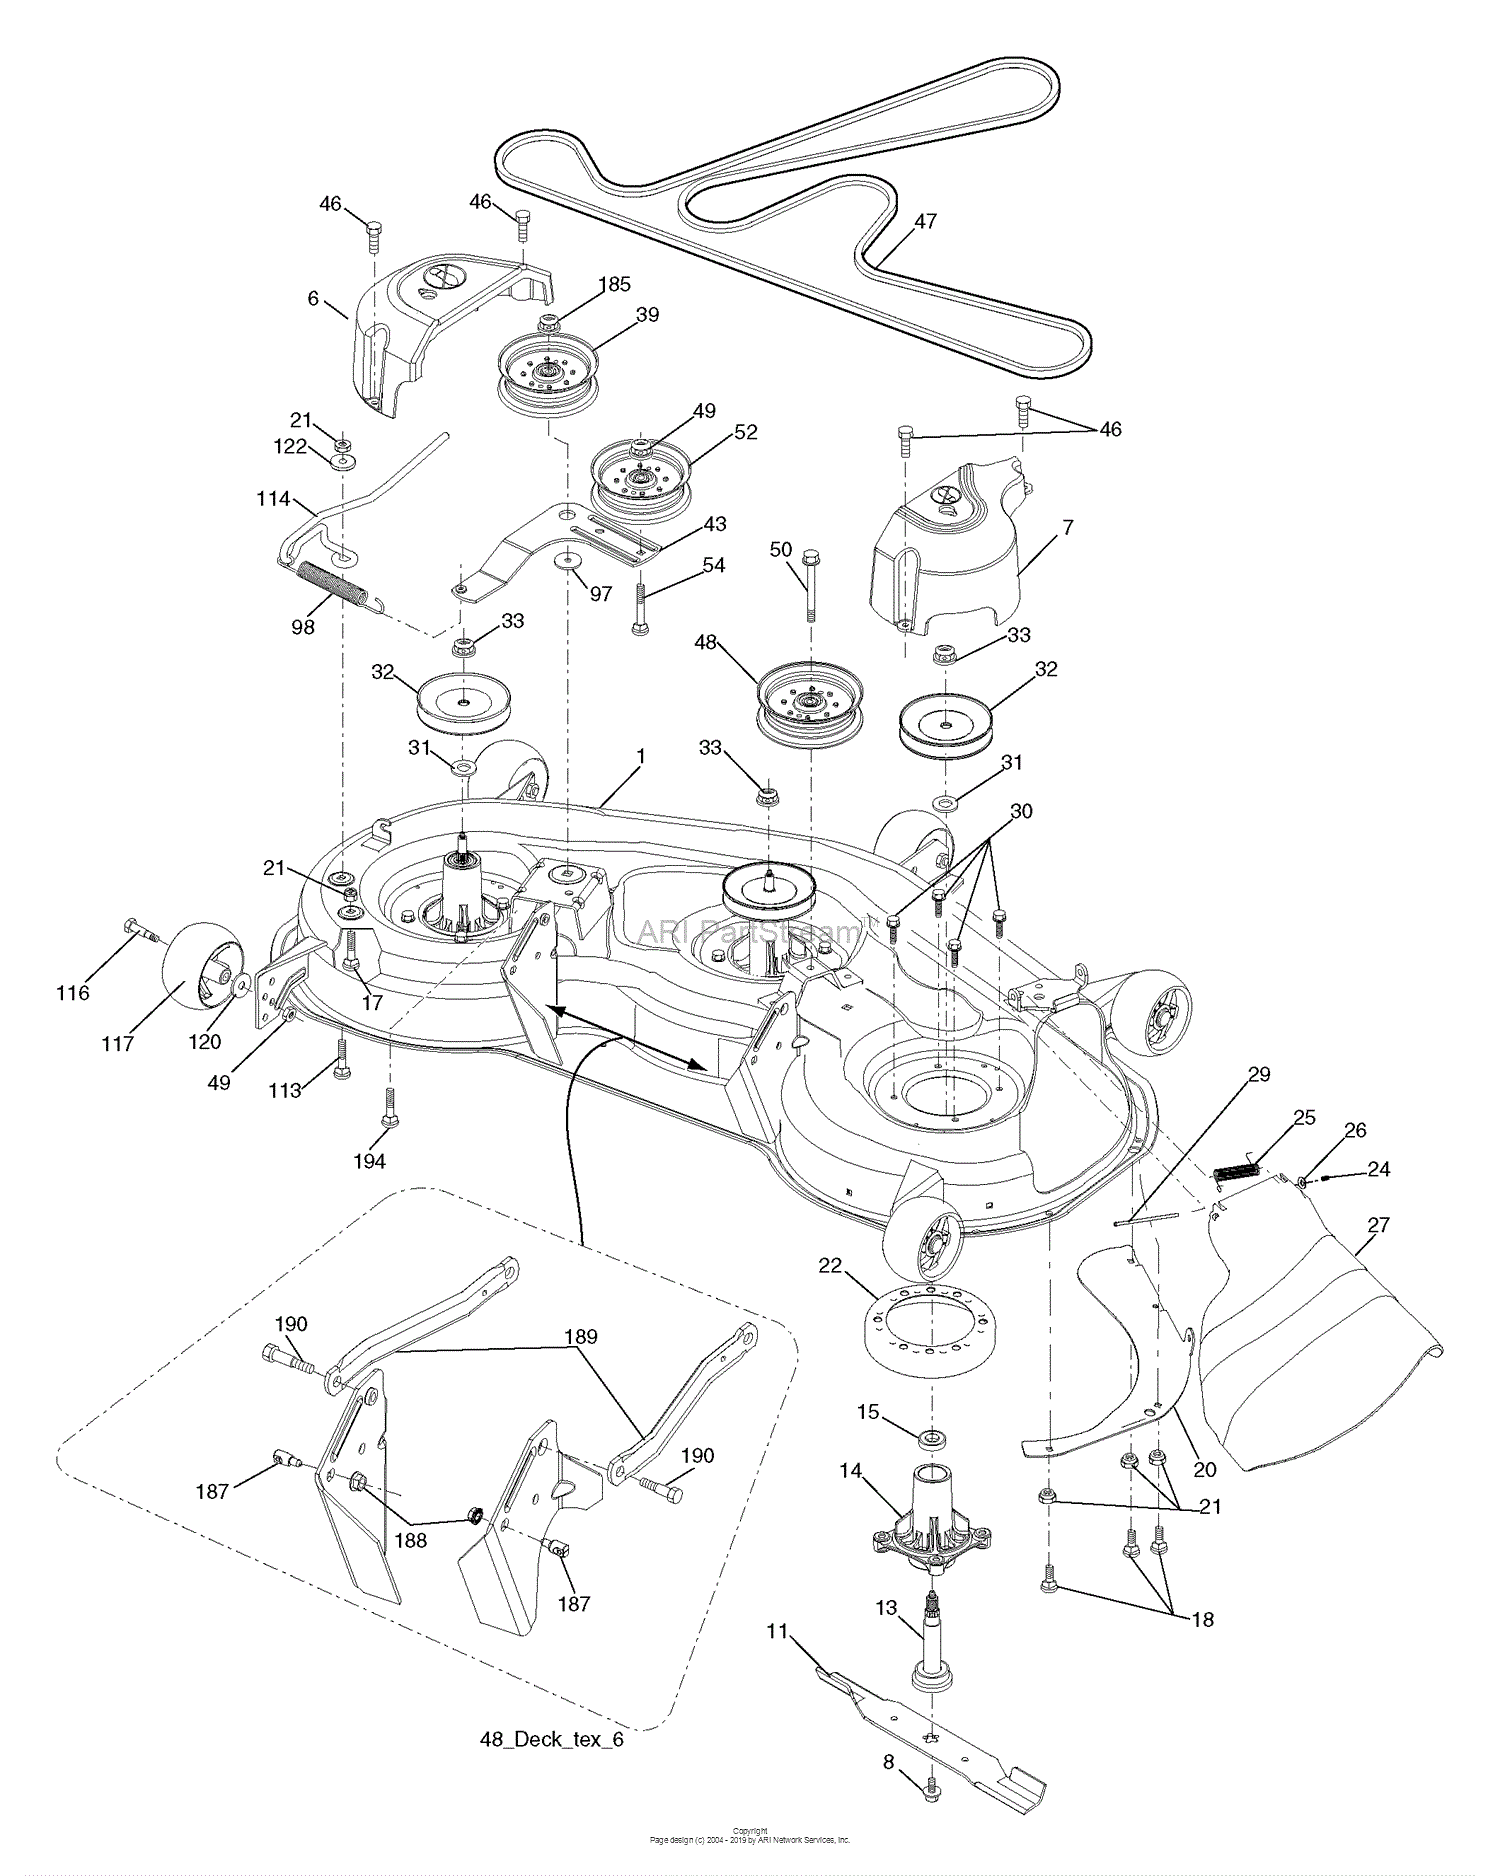 2006 husqvarna te510 wiring diagram